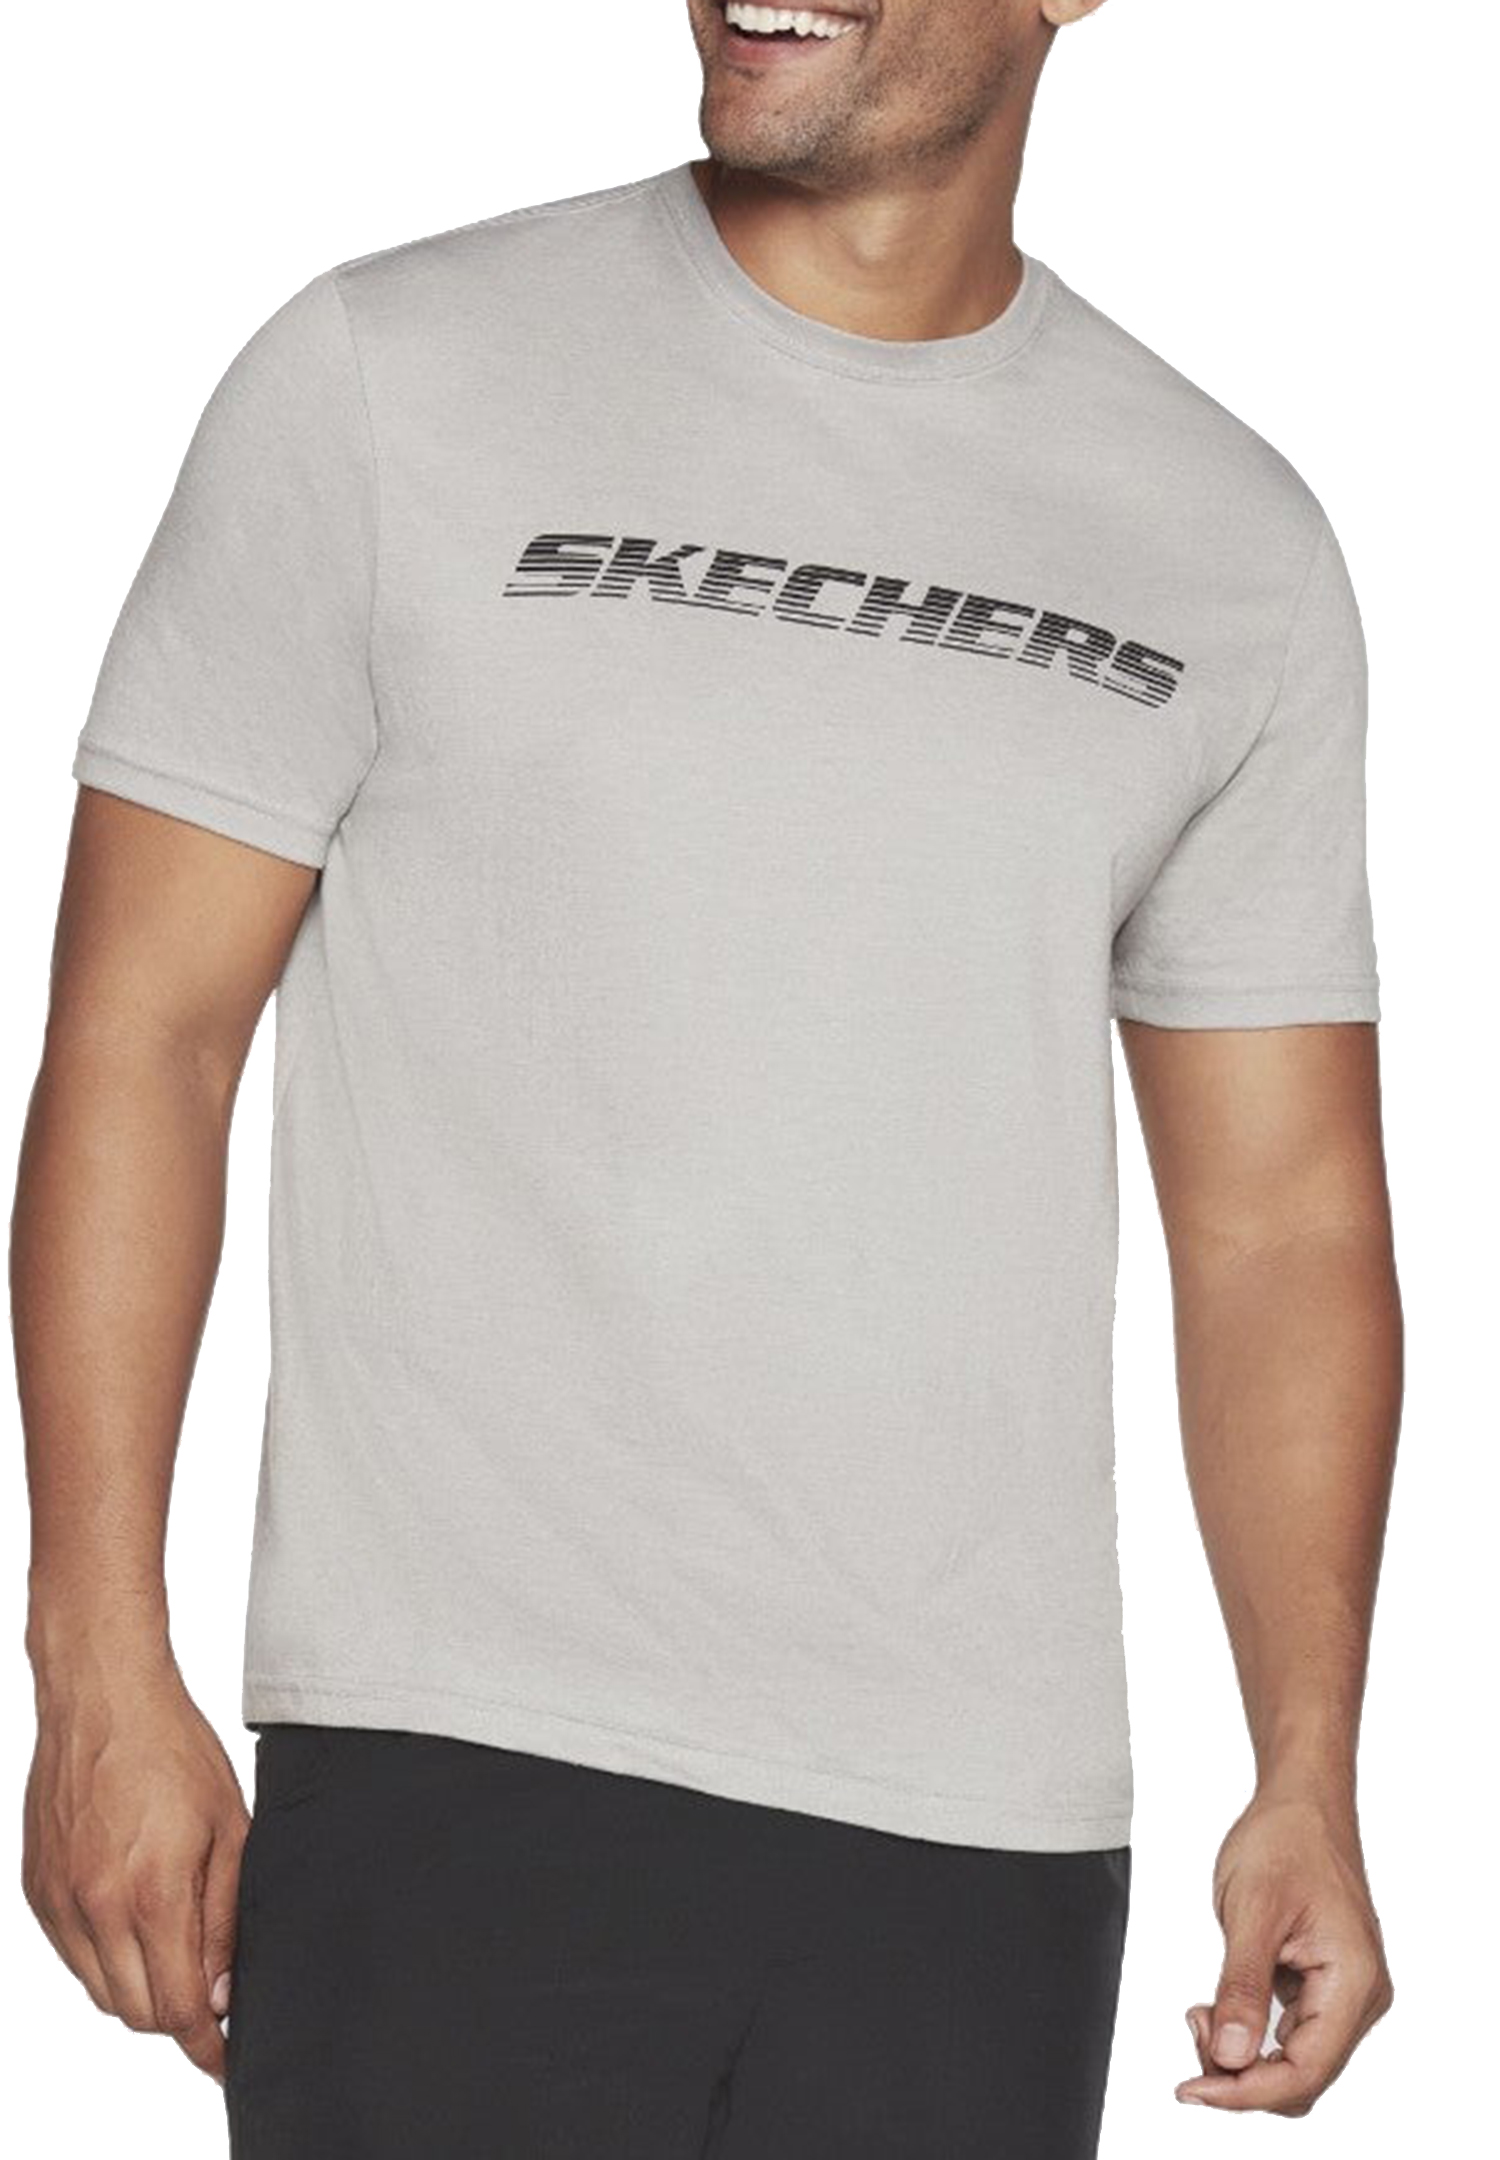 Skechers MEN'S MOTION TEE Shirt Herren T-Shirt MTS367 183 CMNT grau